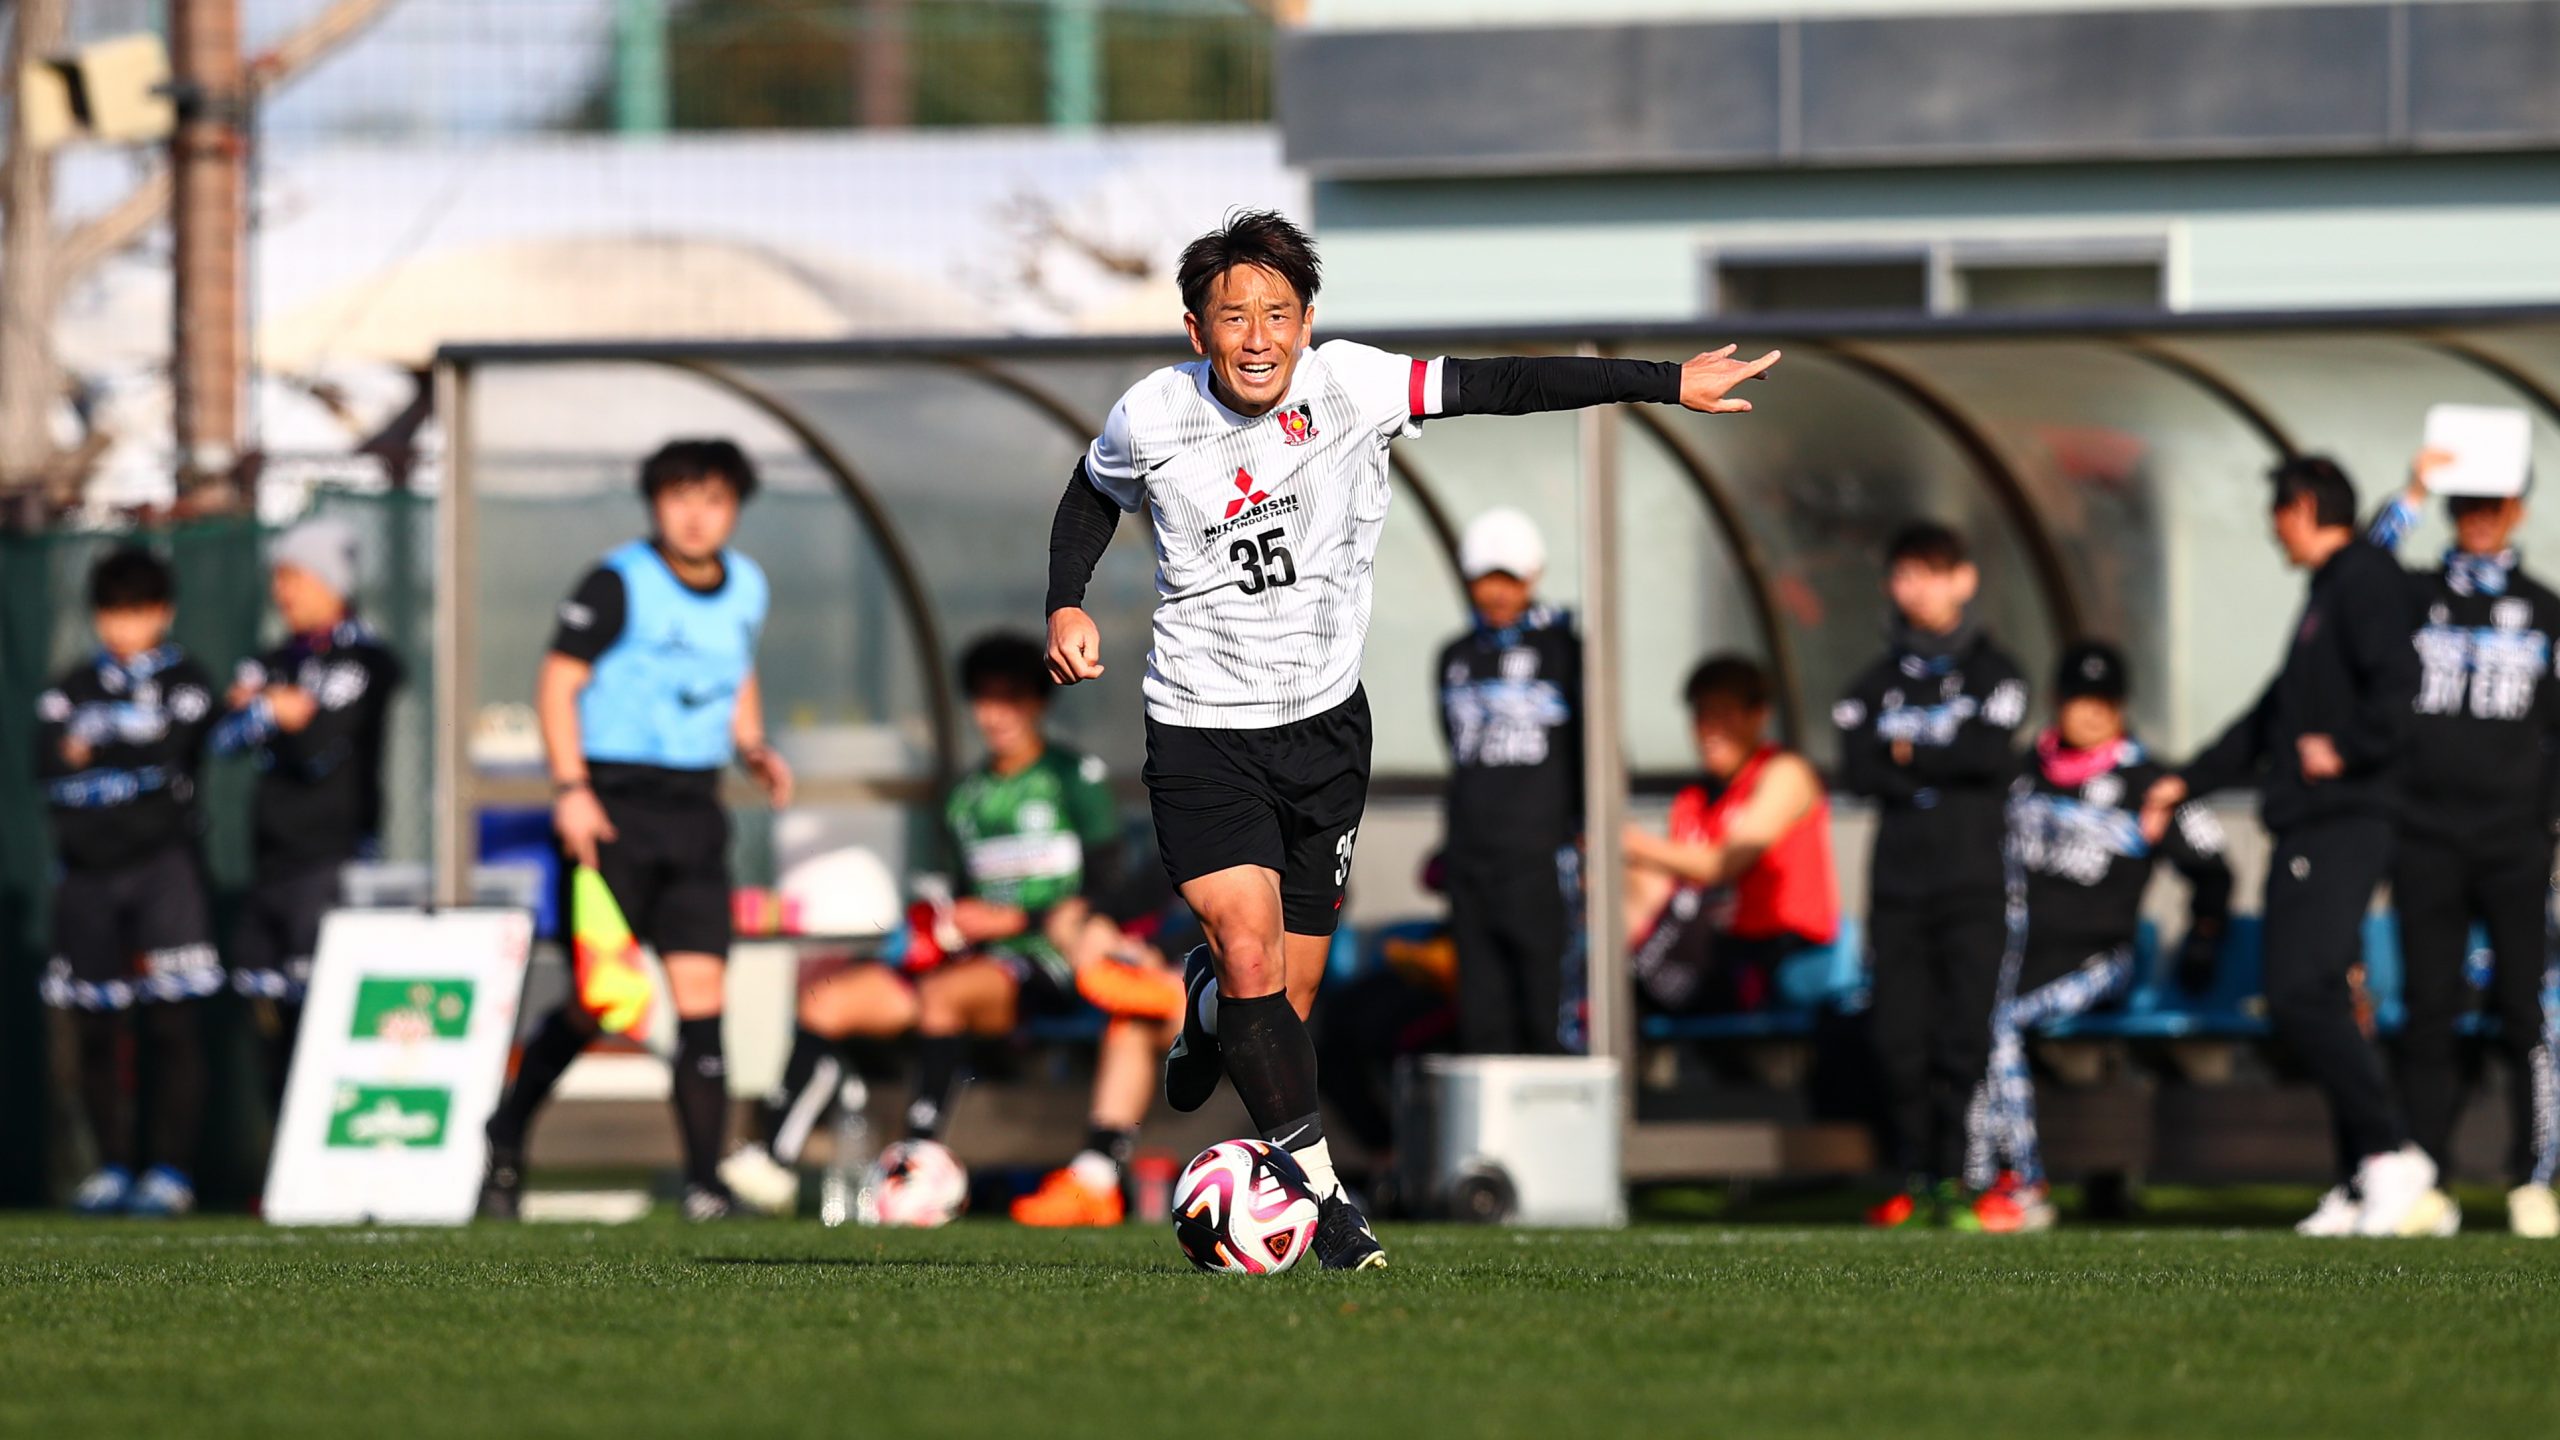 Training match vs Tochigi City FC match results